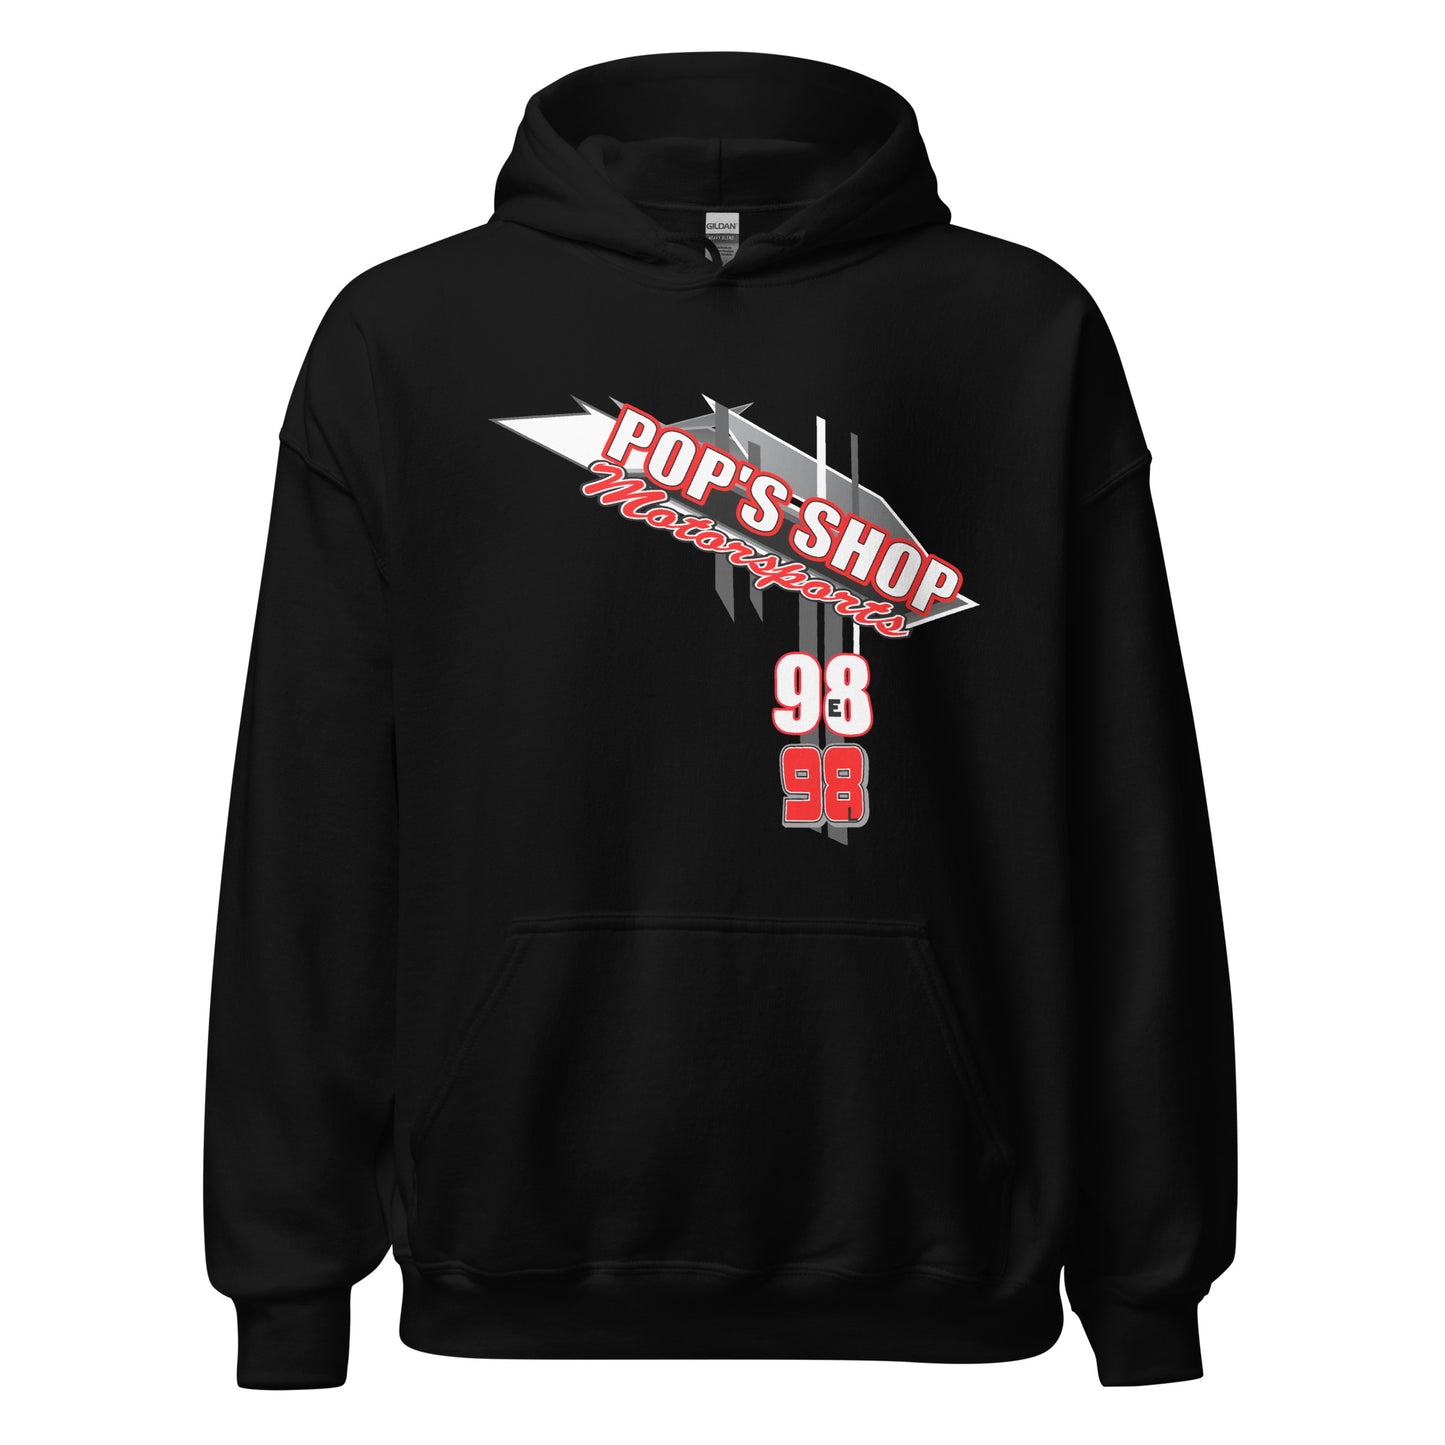 Pop's Shop Motorsports Adult Hoodie Sweatshirt